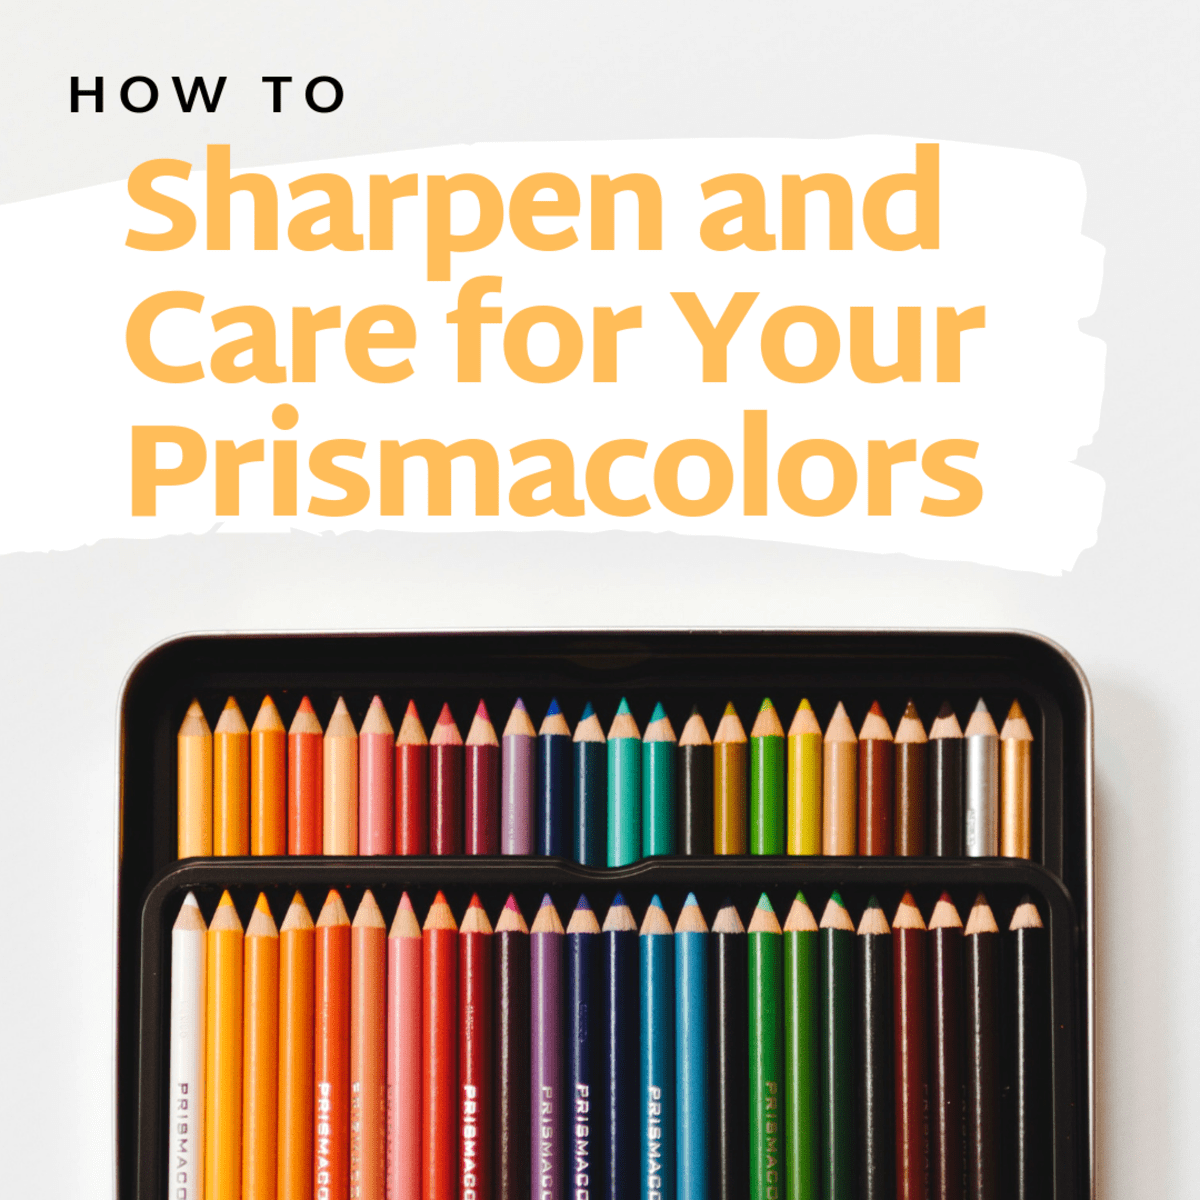 How to open your #prismacolor sharpener #WordsOfWisdom #artist #pencil